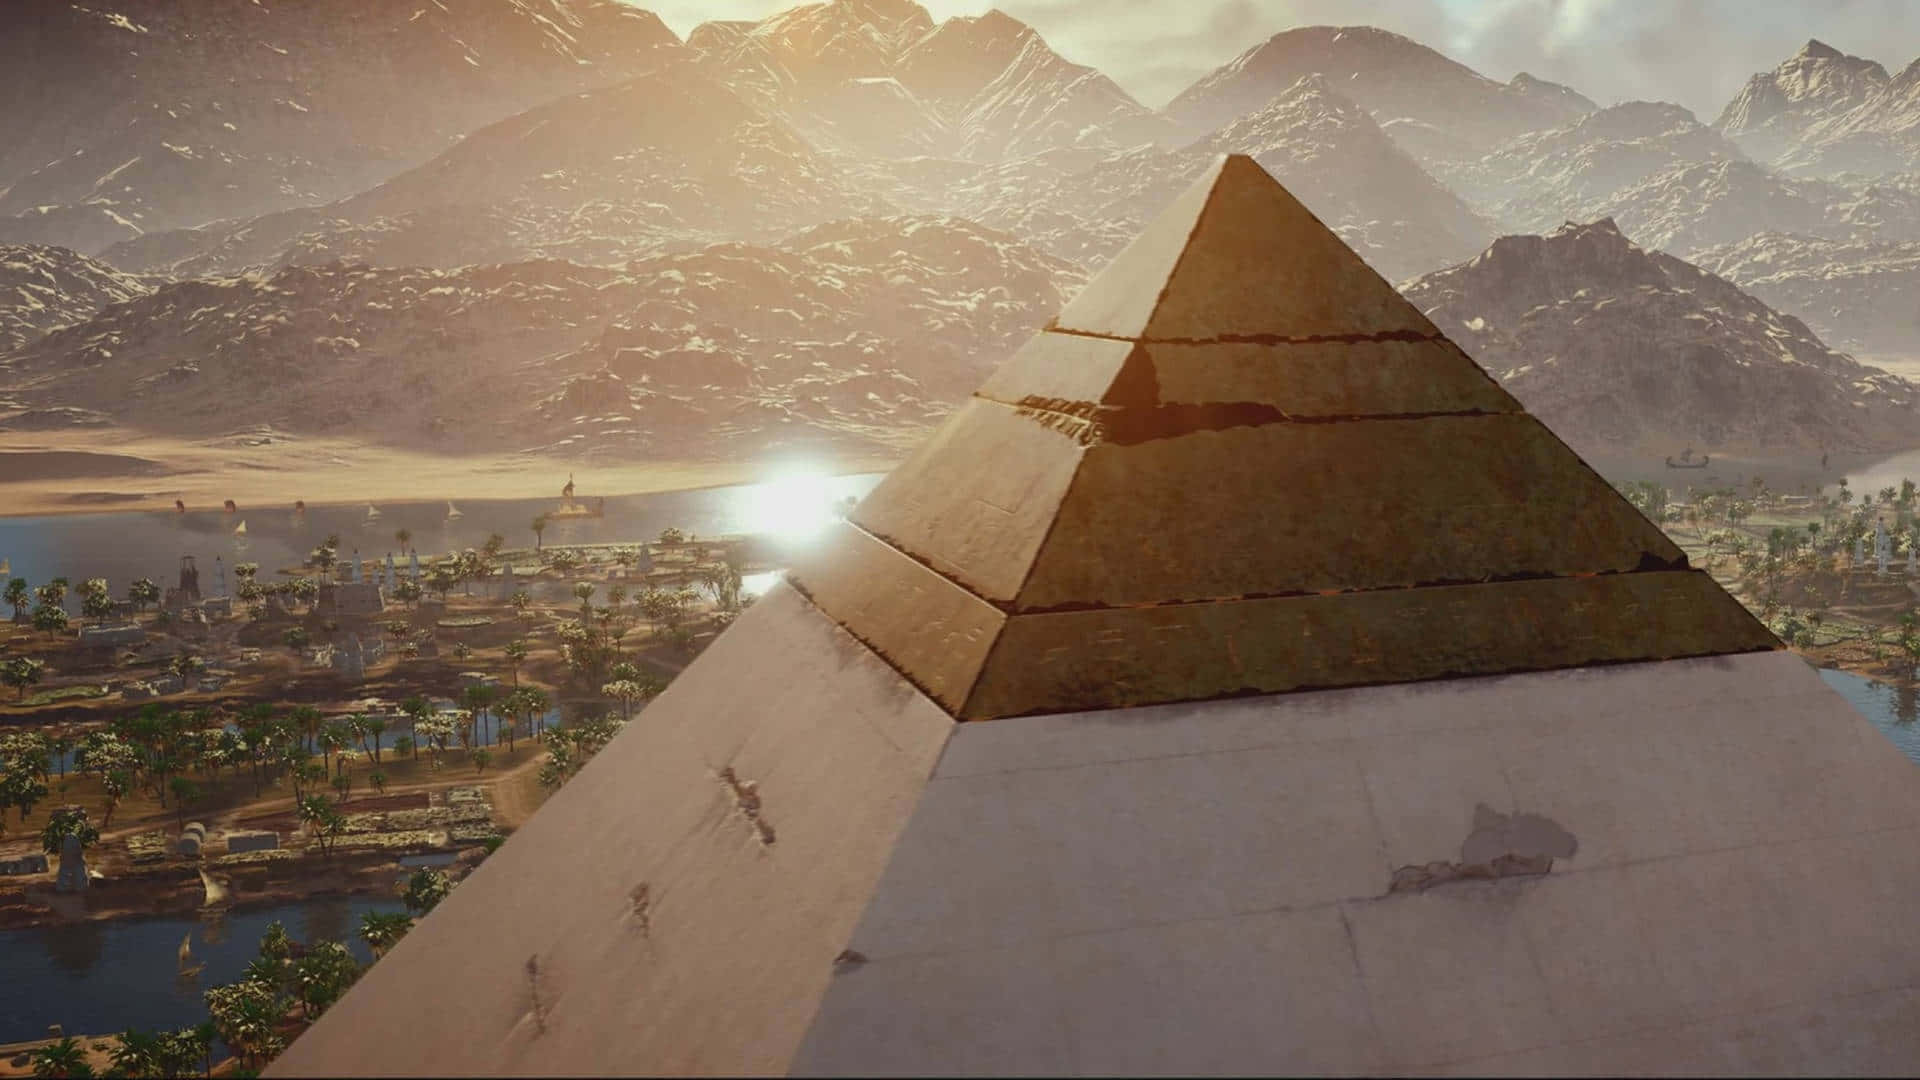 1920x1080assassin's Creed Odyssey Bakgrund Pyramid.